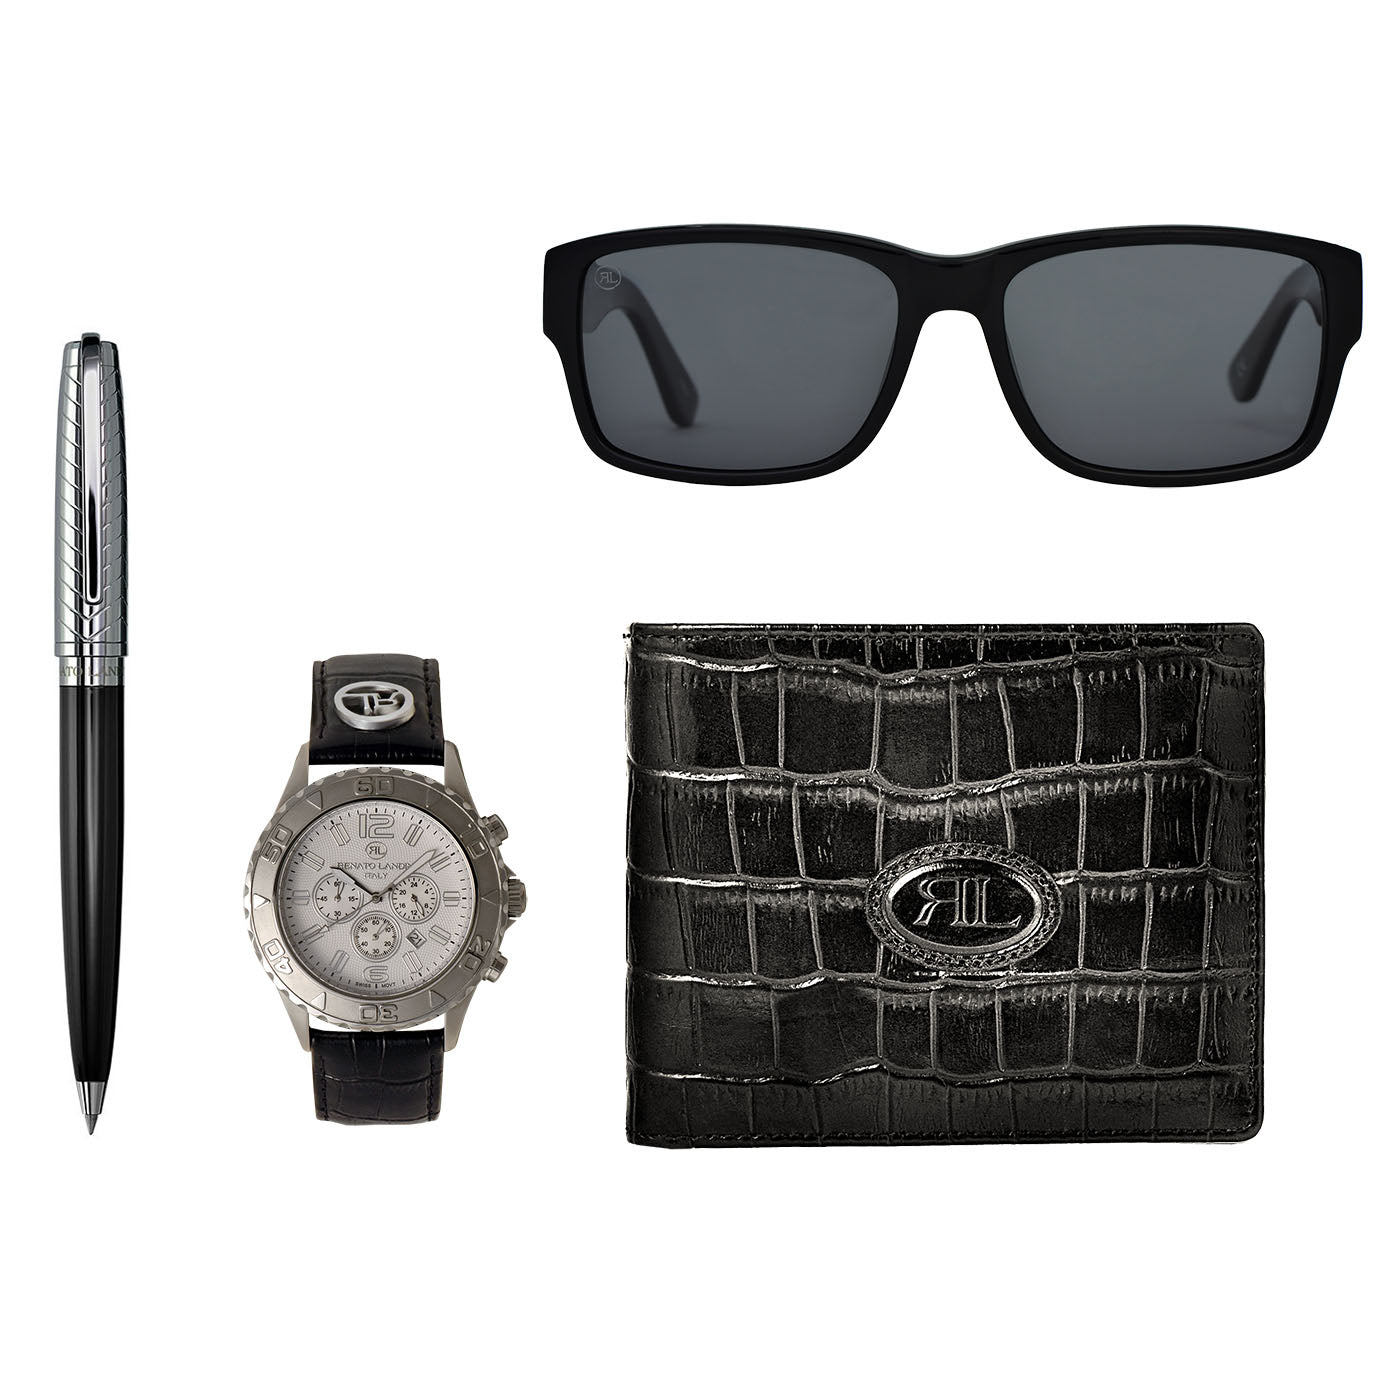 RENATO LANDINI Pen + Wallet + Watch + Sunglasses -c